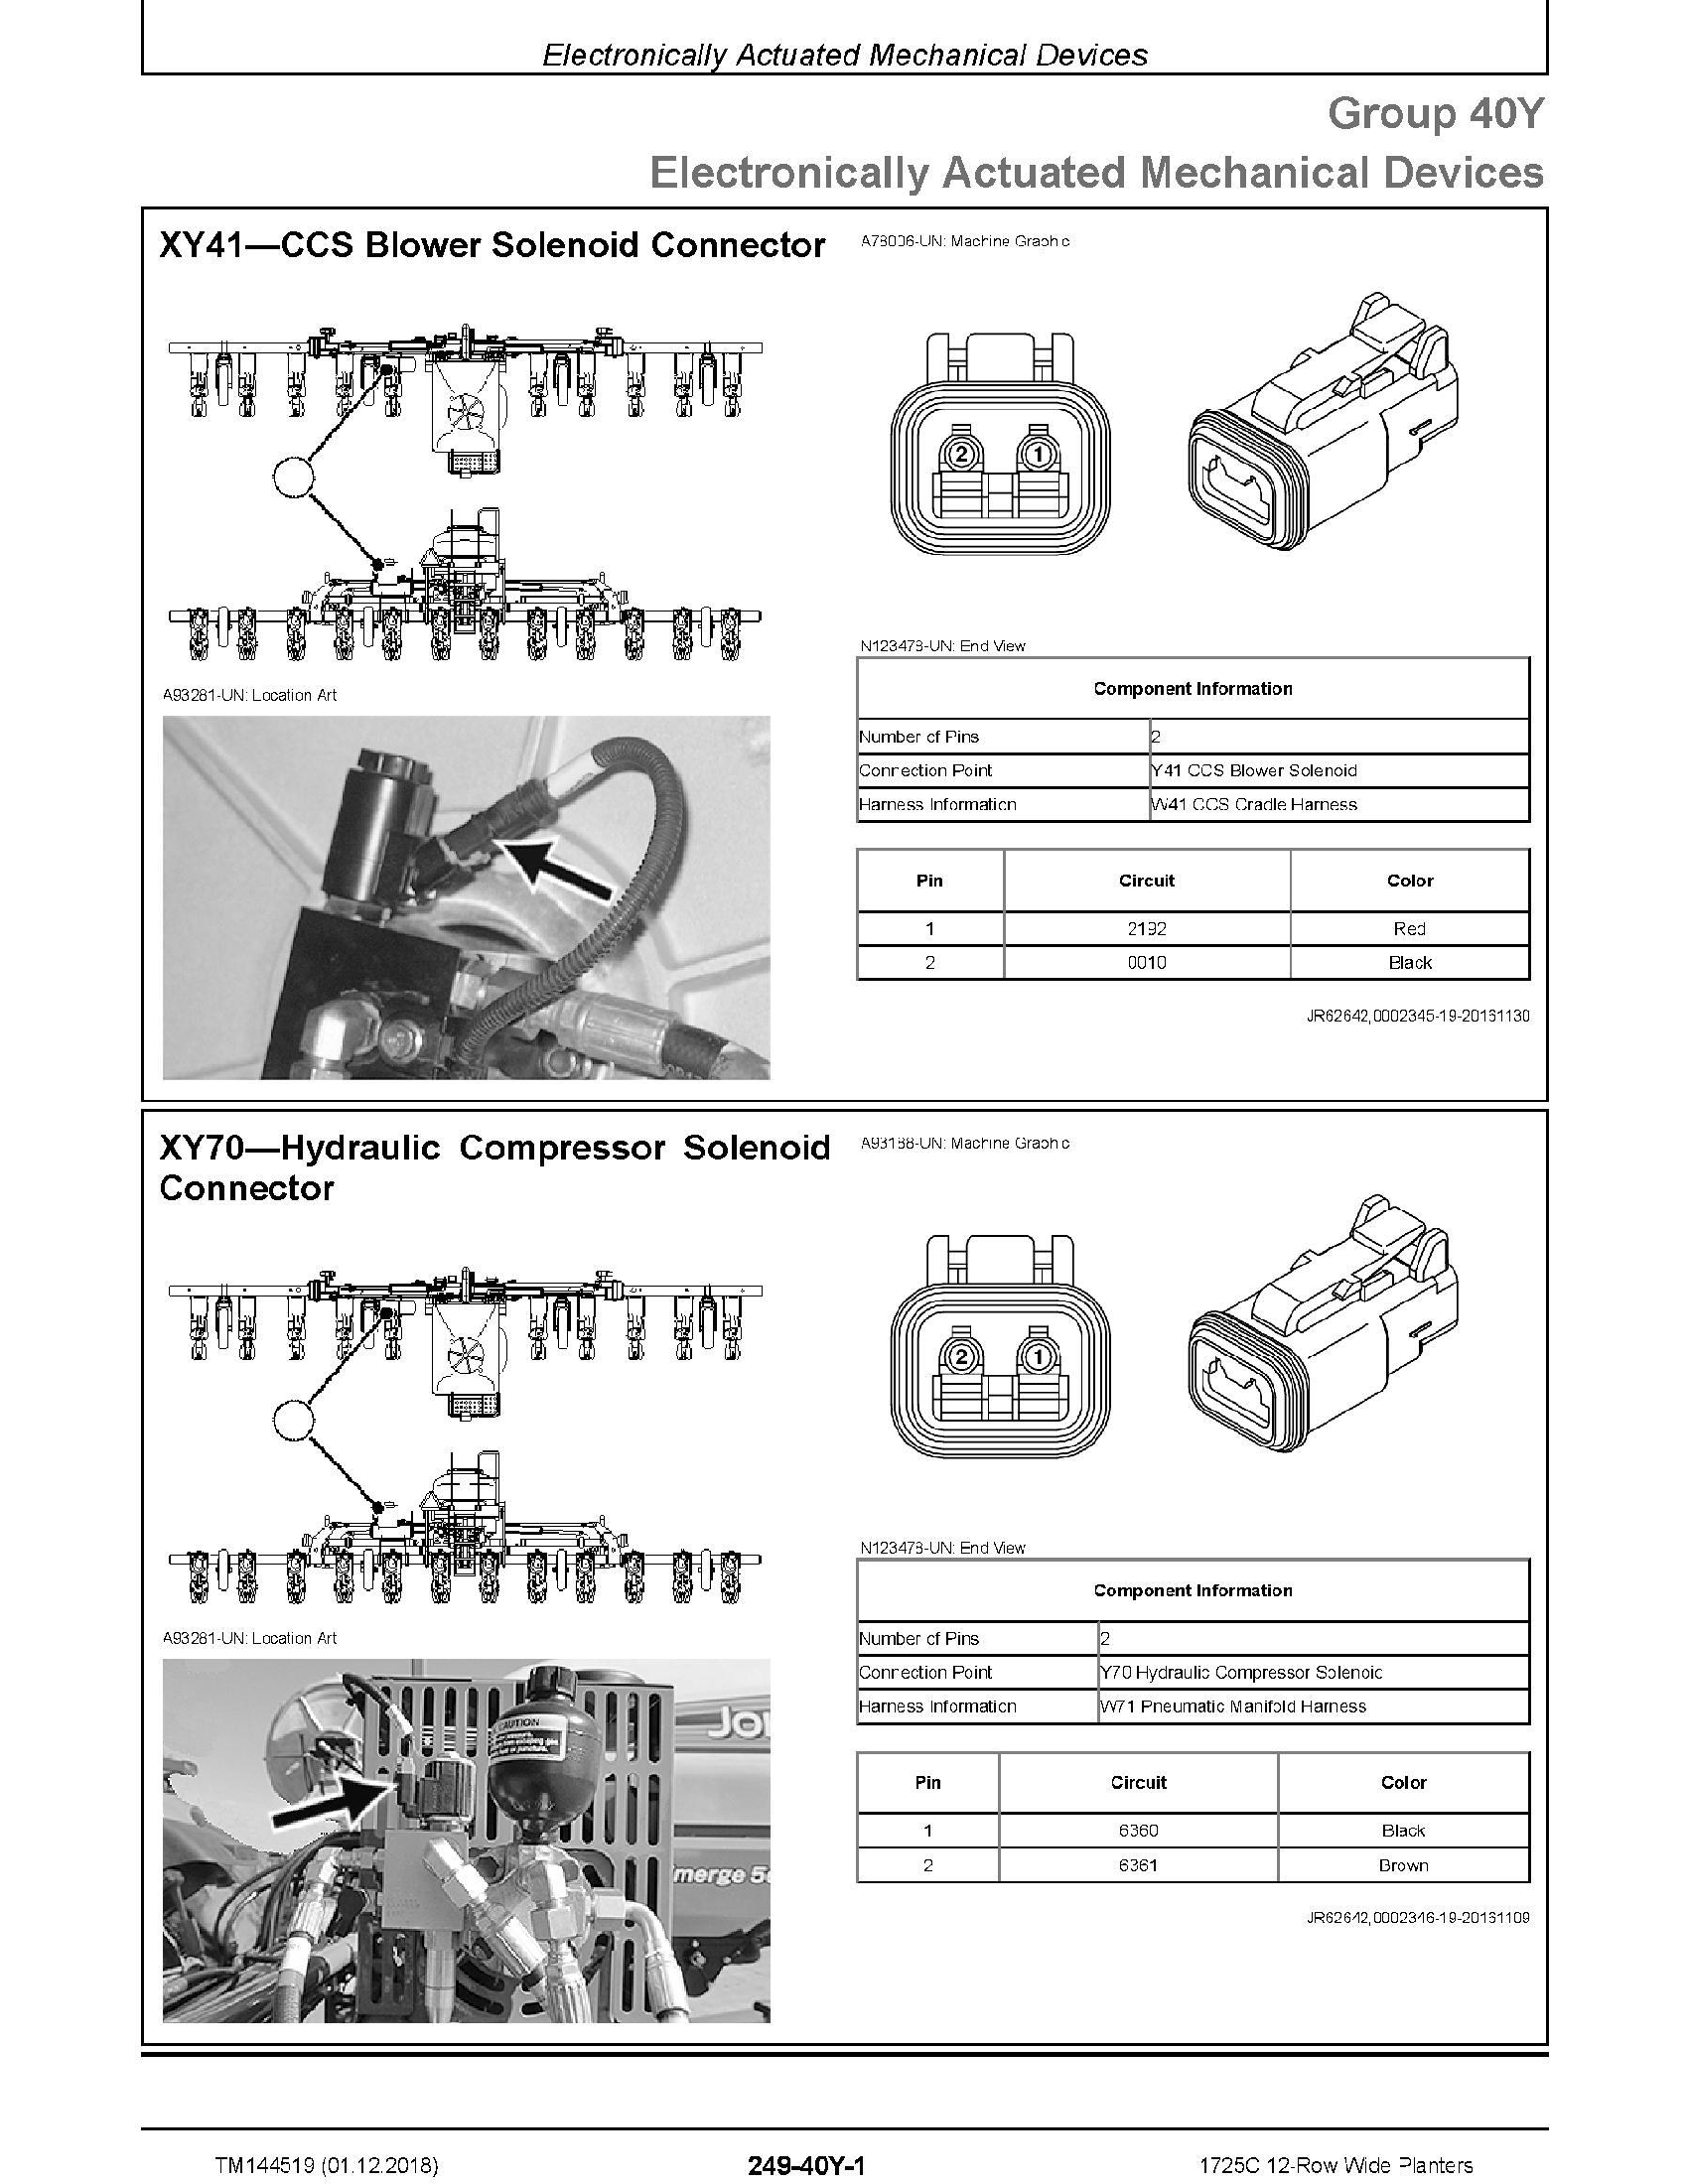 John Deere 1BZ624KA manual pdf